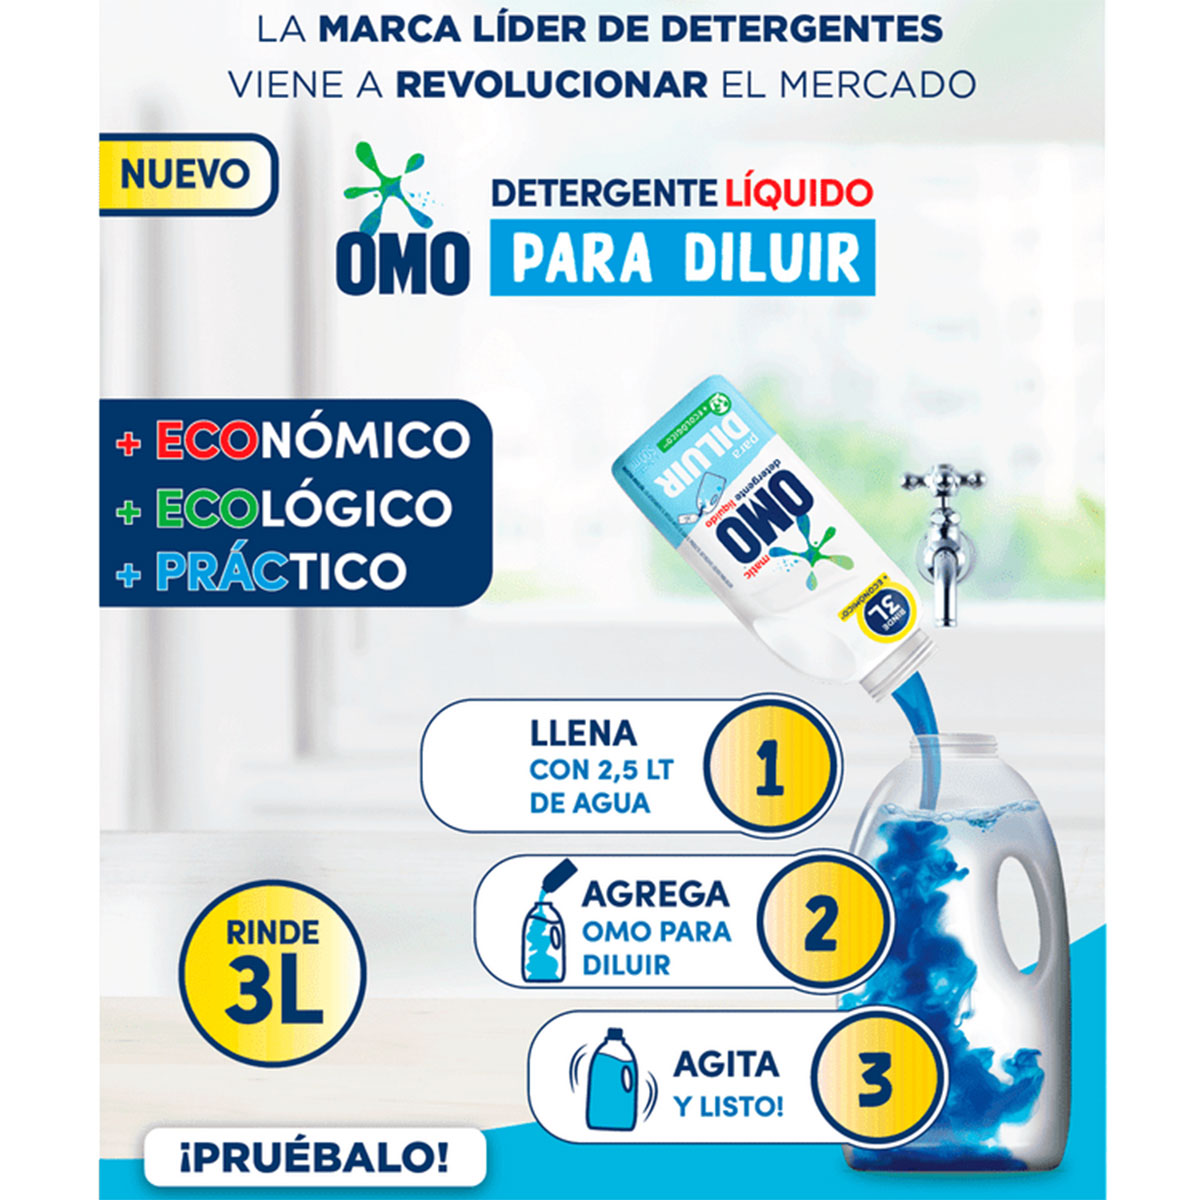 Pack Detergente líquido para diluir OMO 500 ml (rinde 3 litros) 2x $9.990